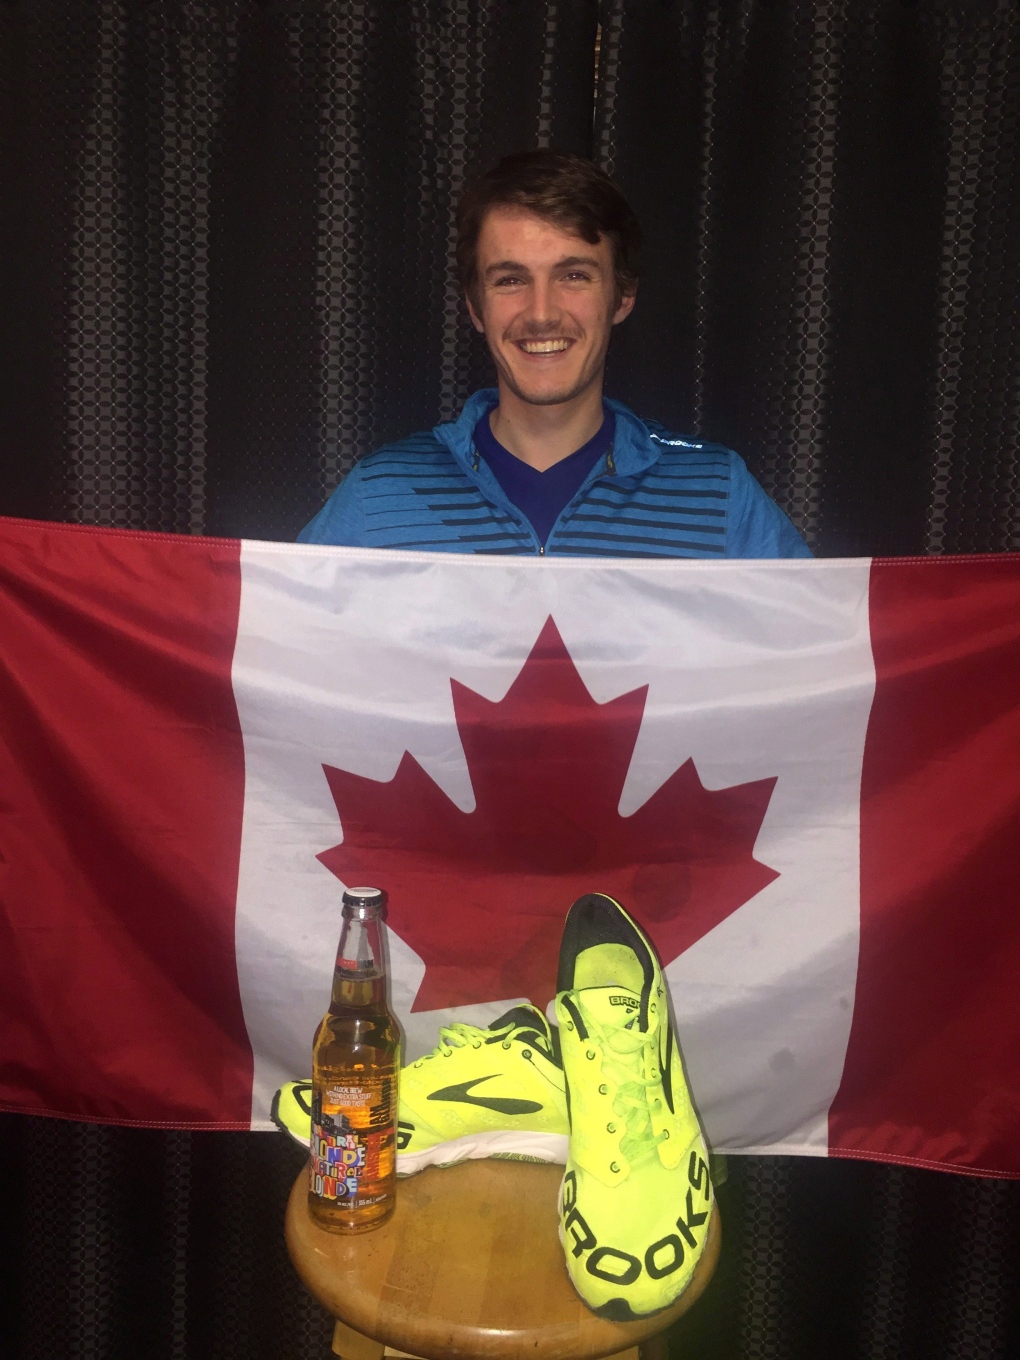 Canadian 'beer mile' champ races around 'Ellen' stage | CTV News